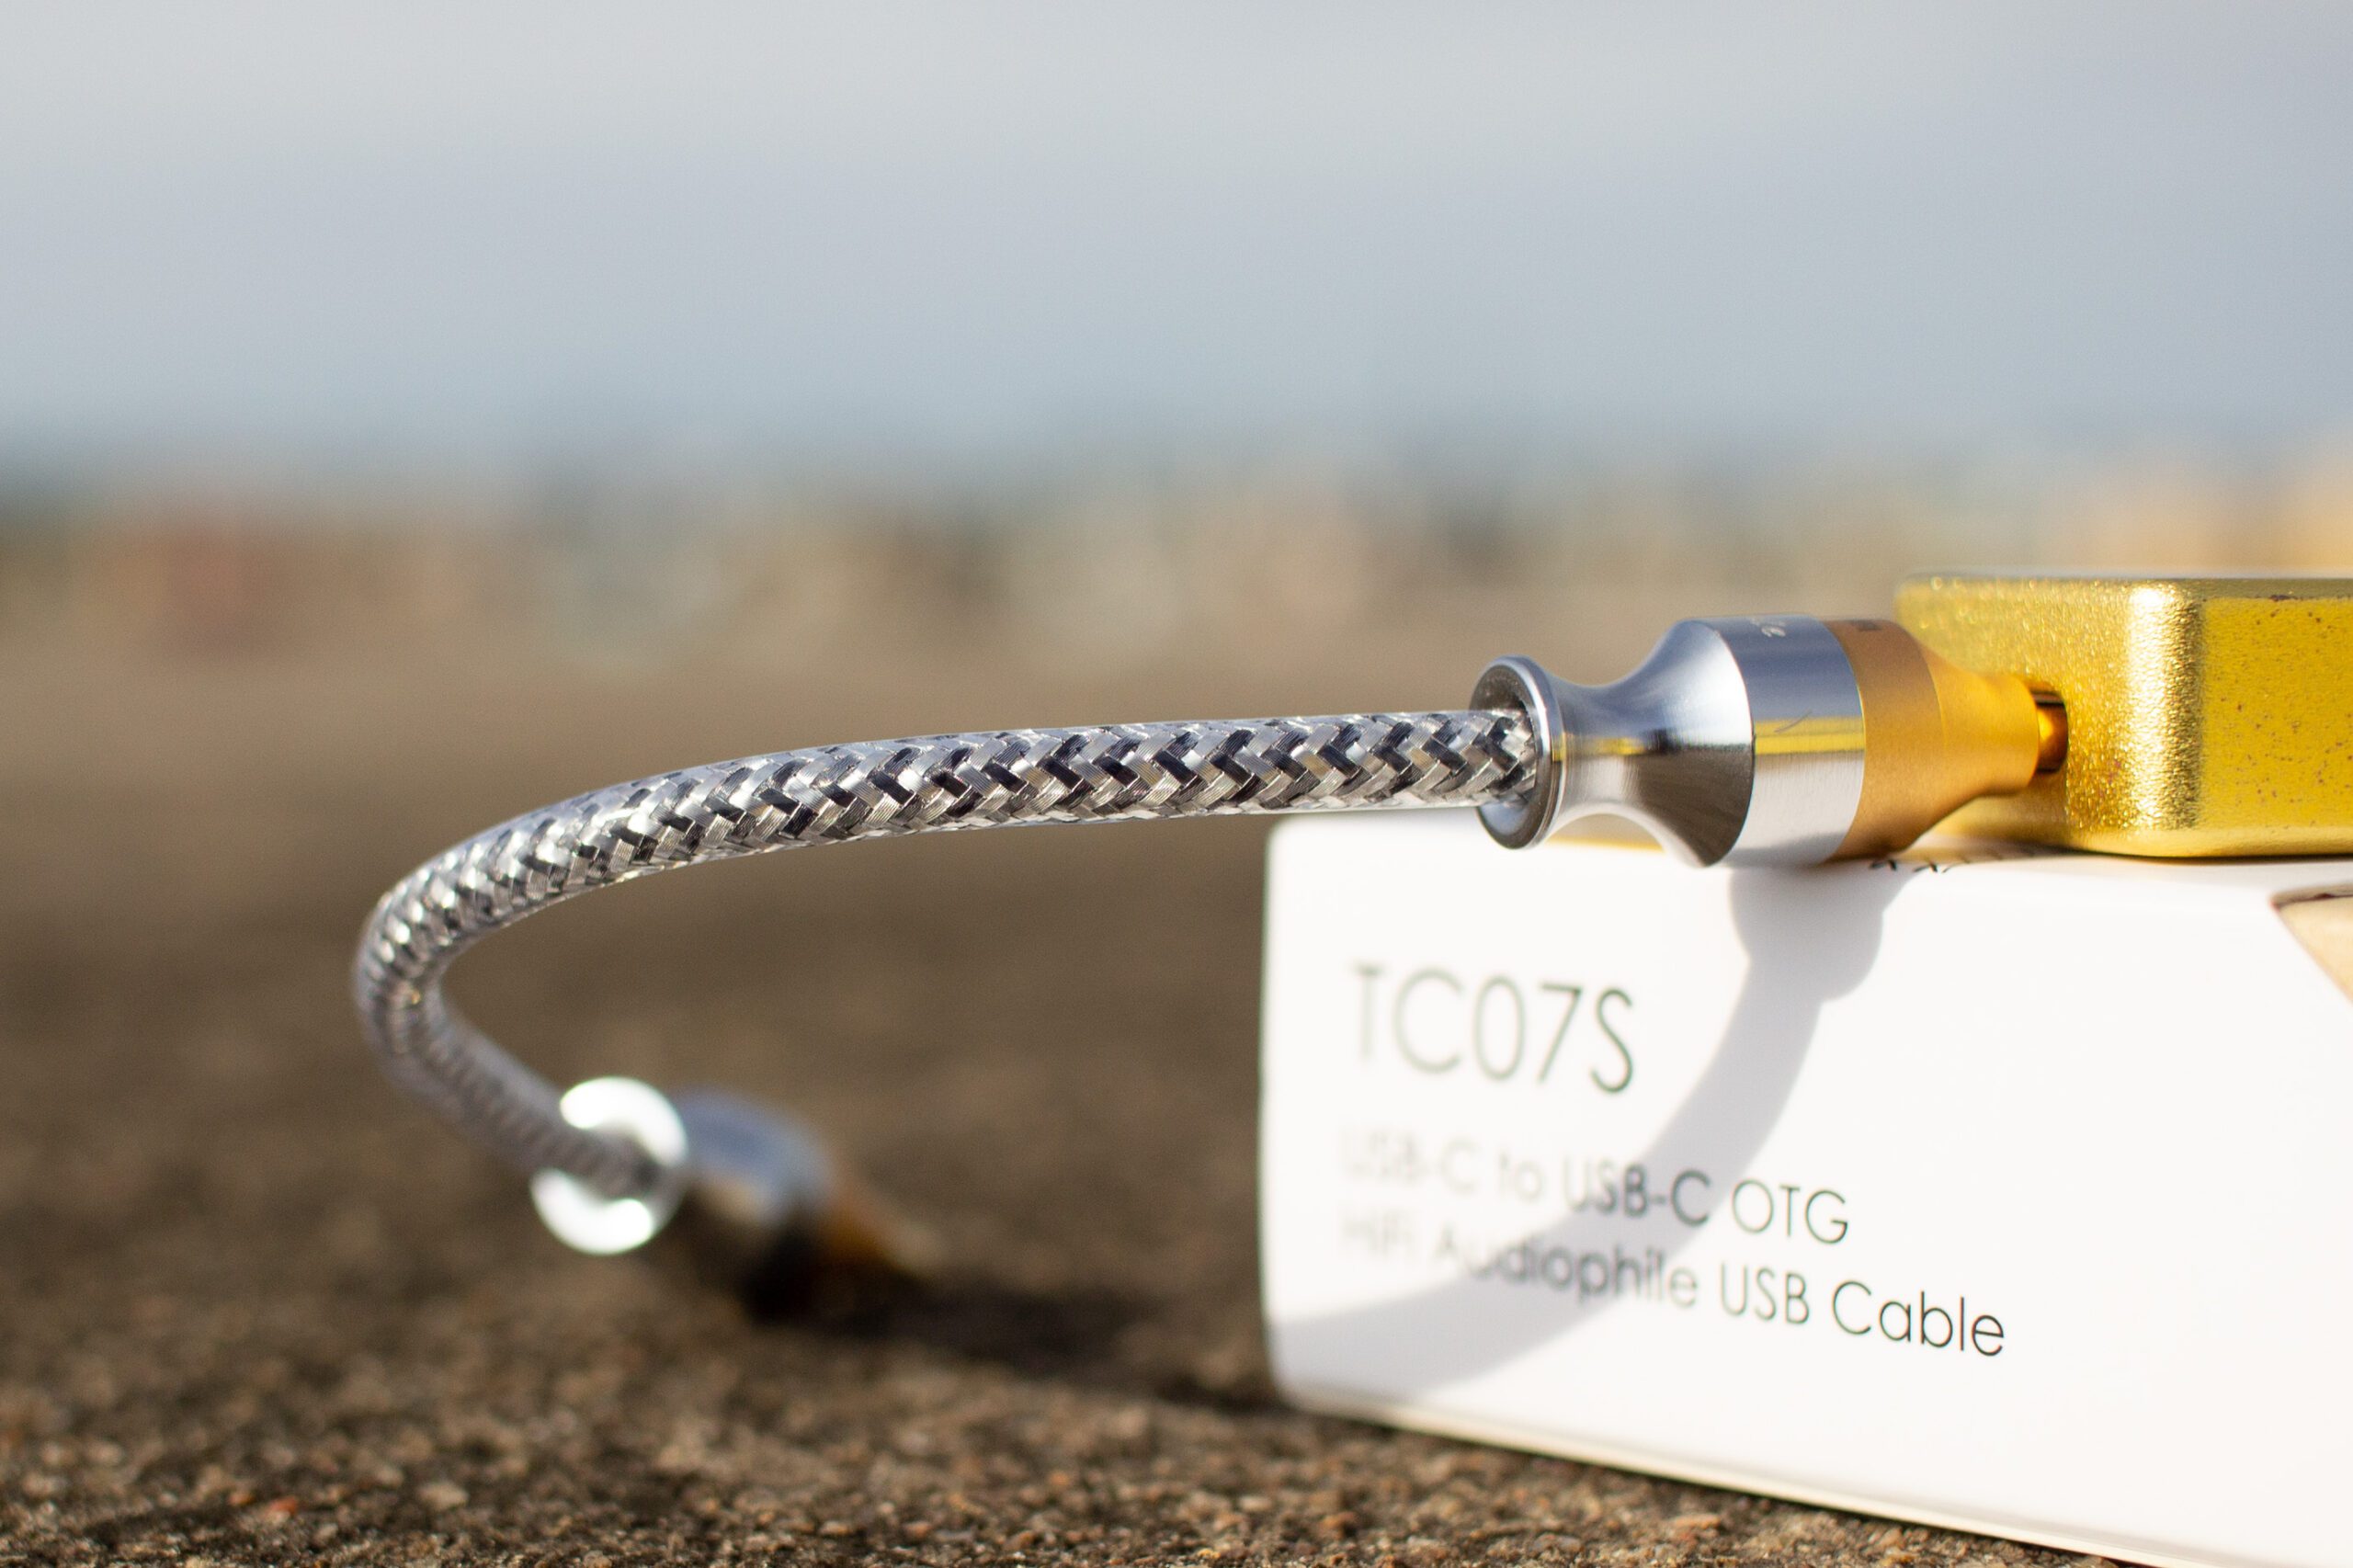 TC09S USB-C to USB-C OTG Cable (10cm / 50cm) - ddHiFi